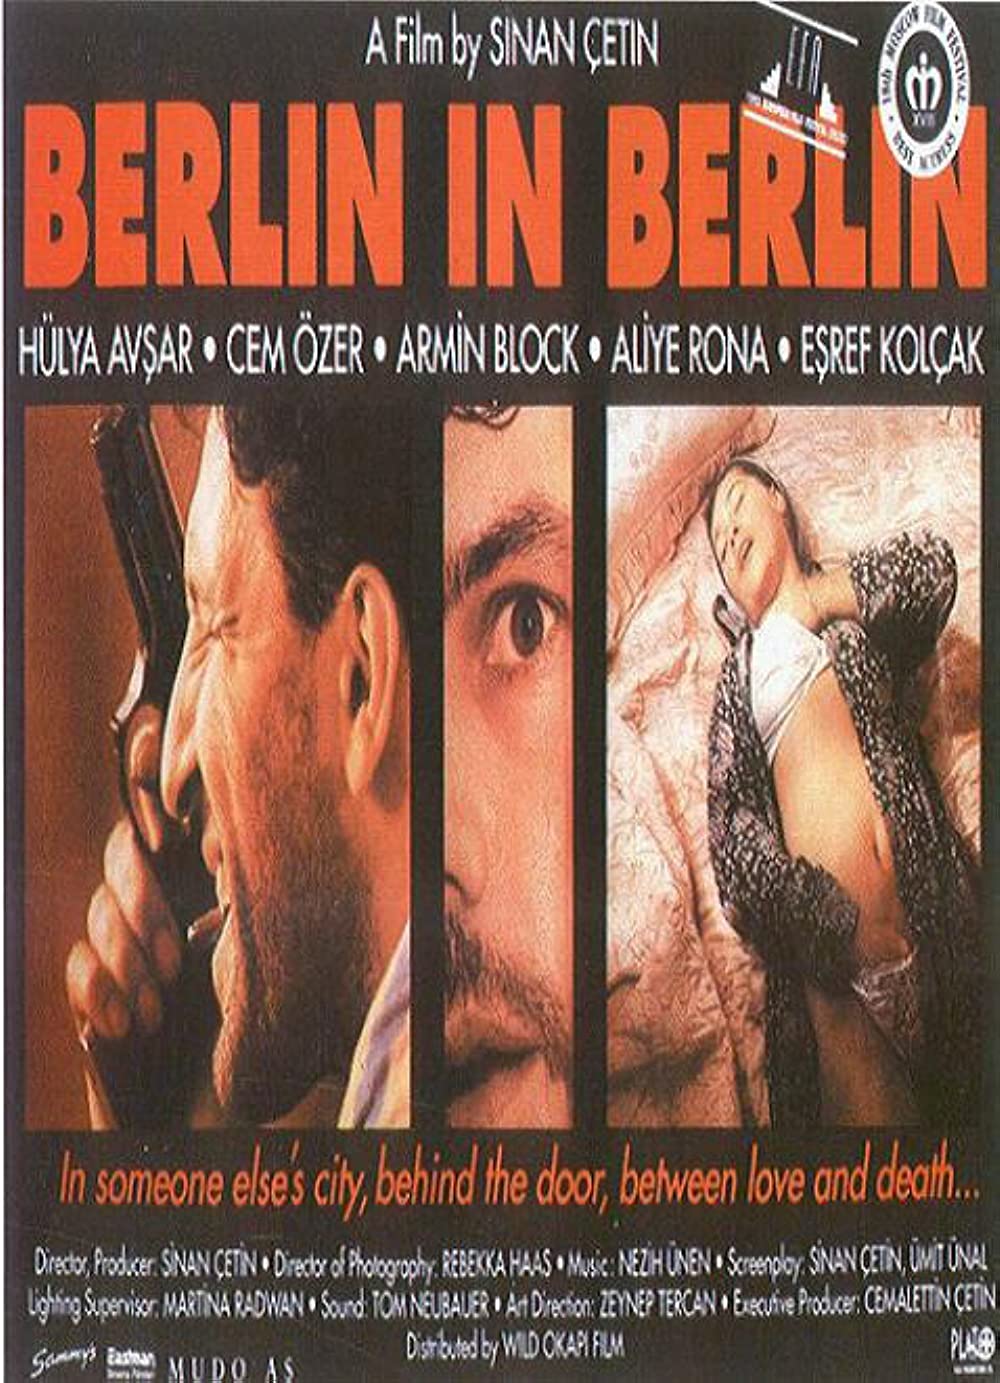 Filmbeschreibung zu Berlin in Berlin